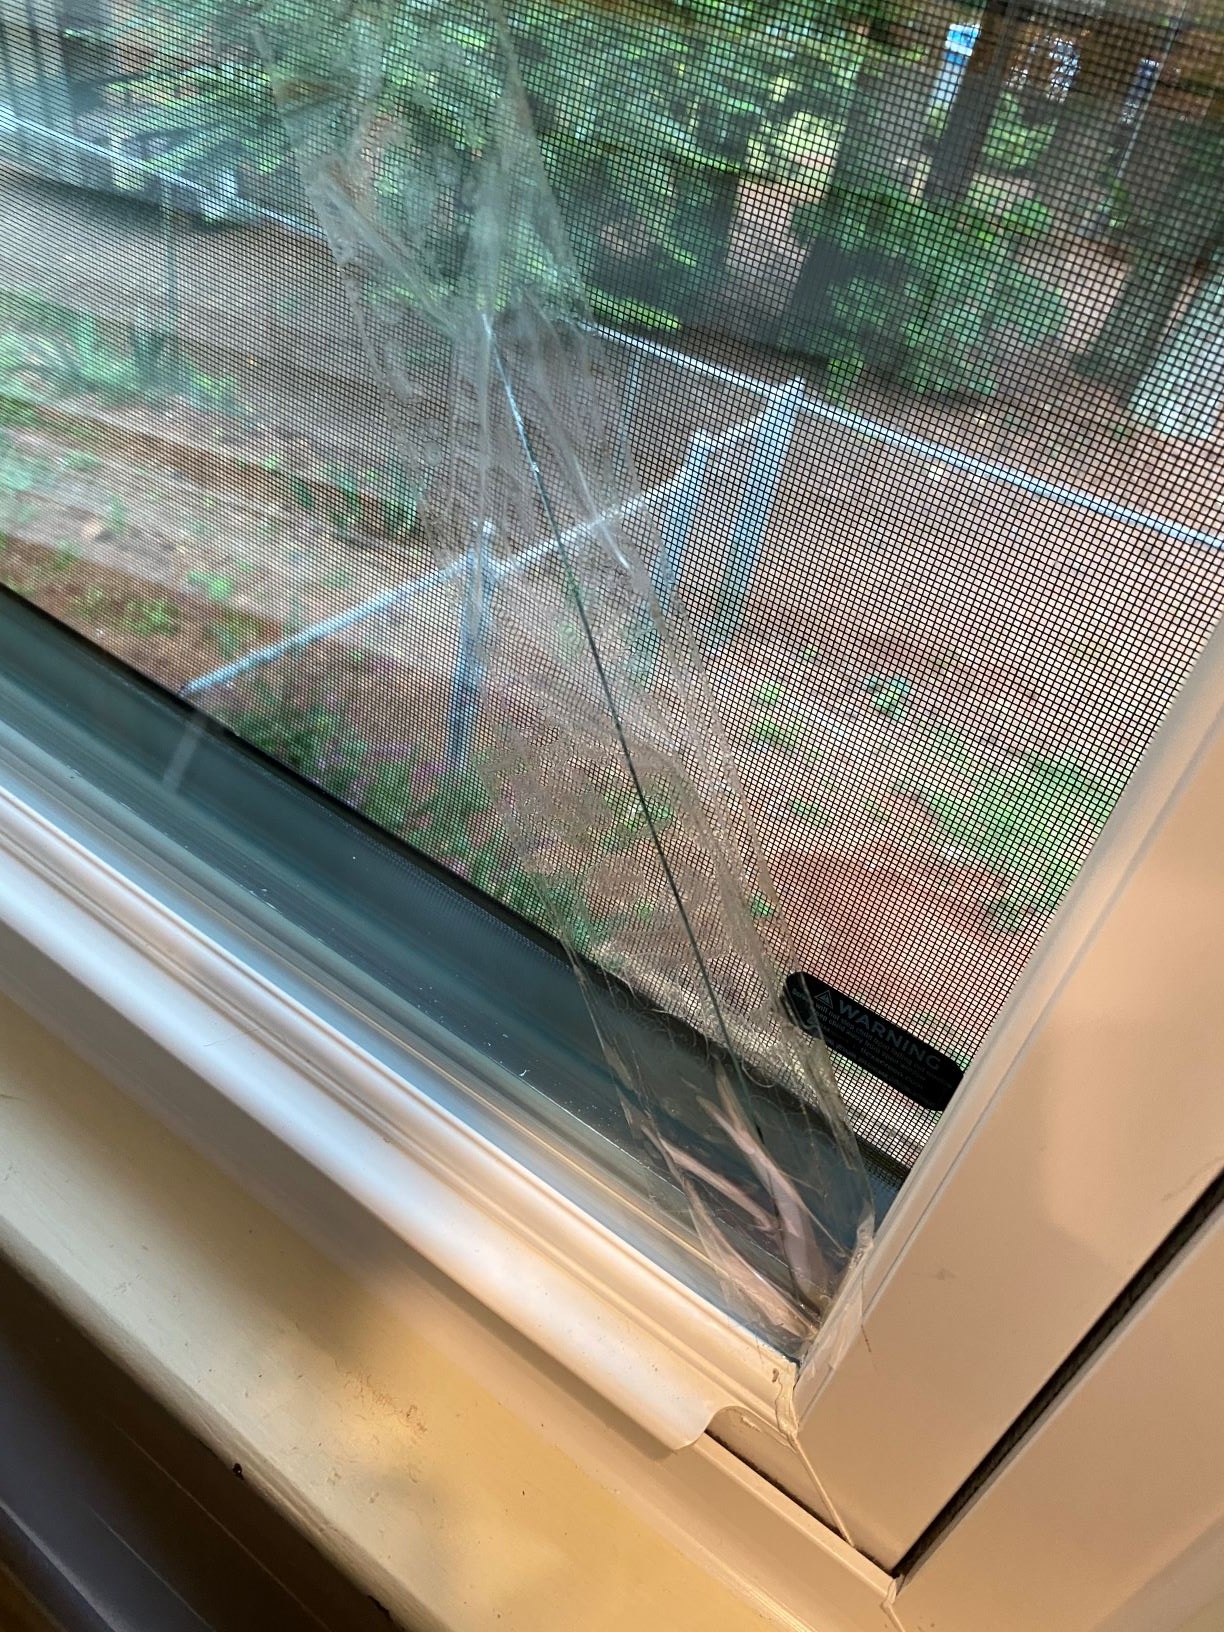 cracked window installed on original install